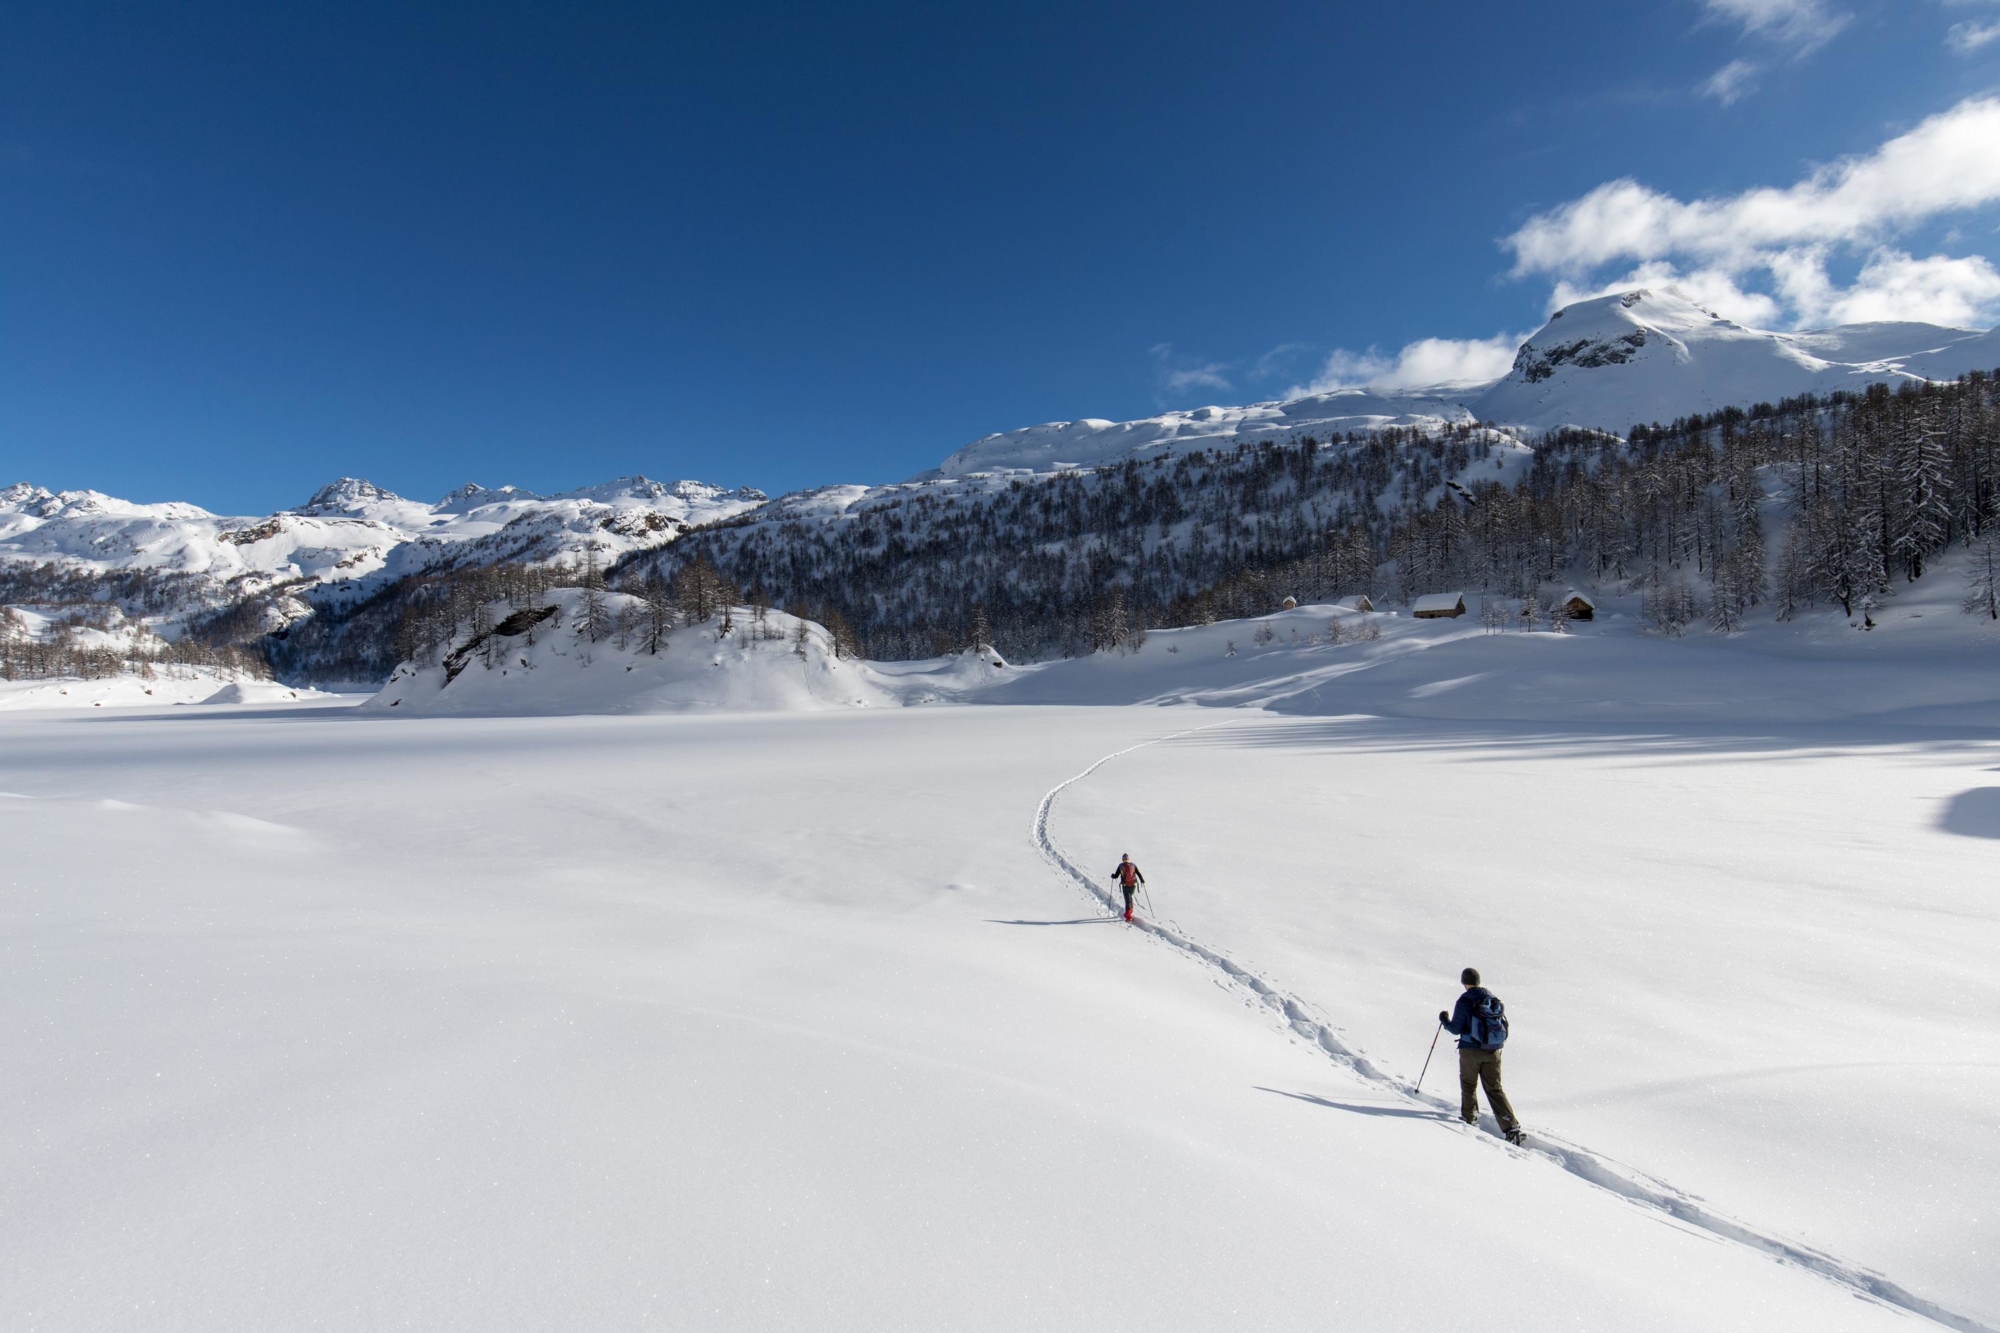 Resultat Ørken At søge tilflugt Snowshoeing in the Ossola Valley - Devero-Crampiolo | VisitOssola